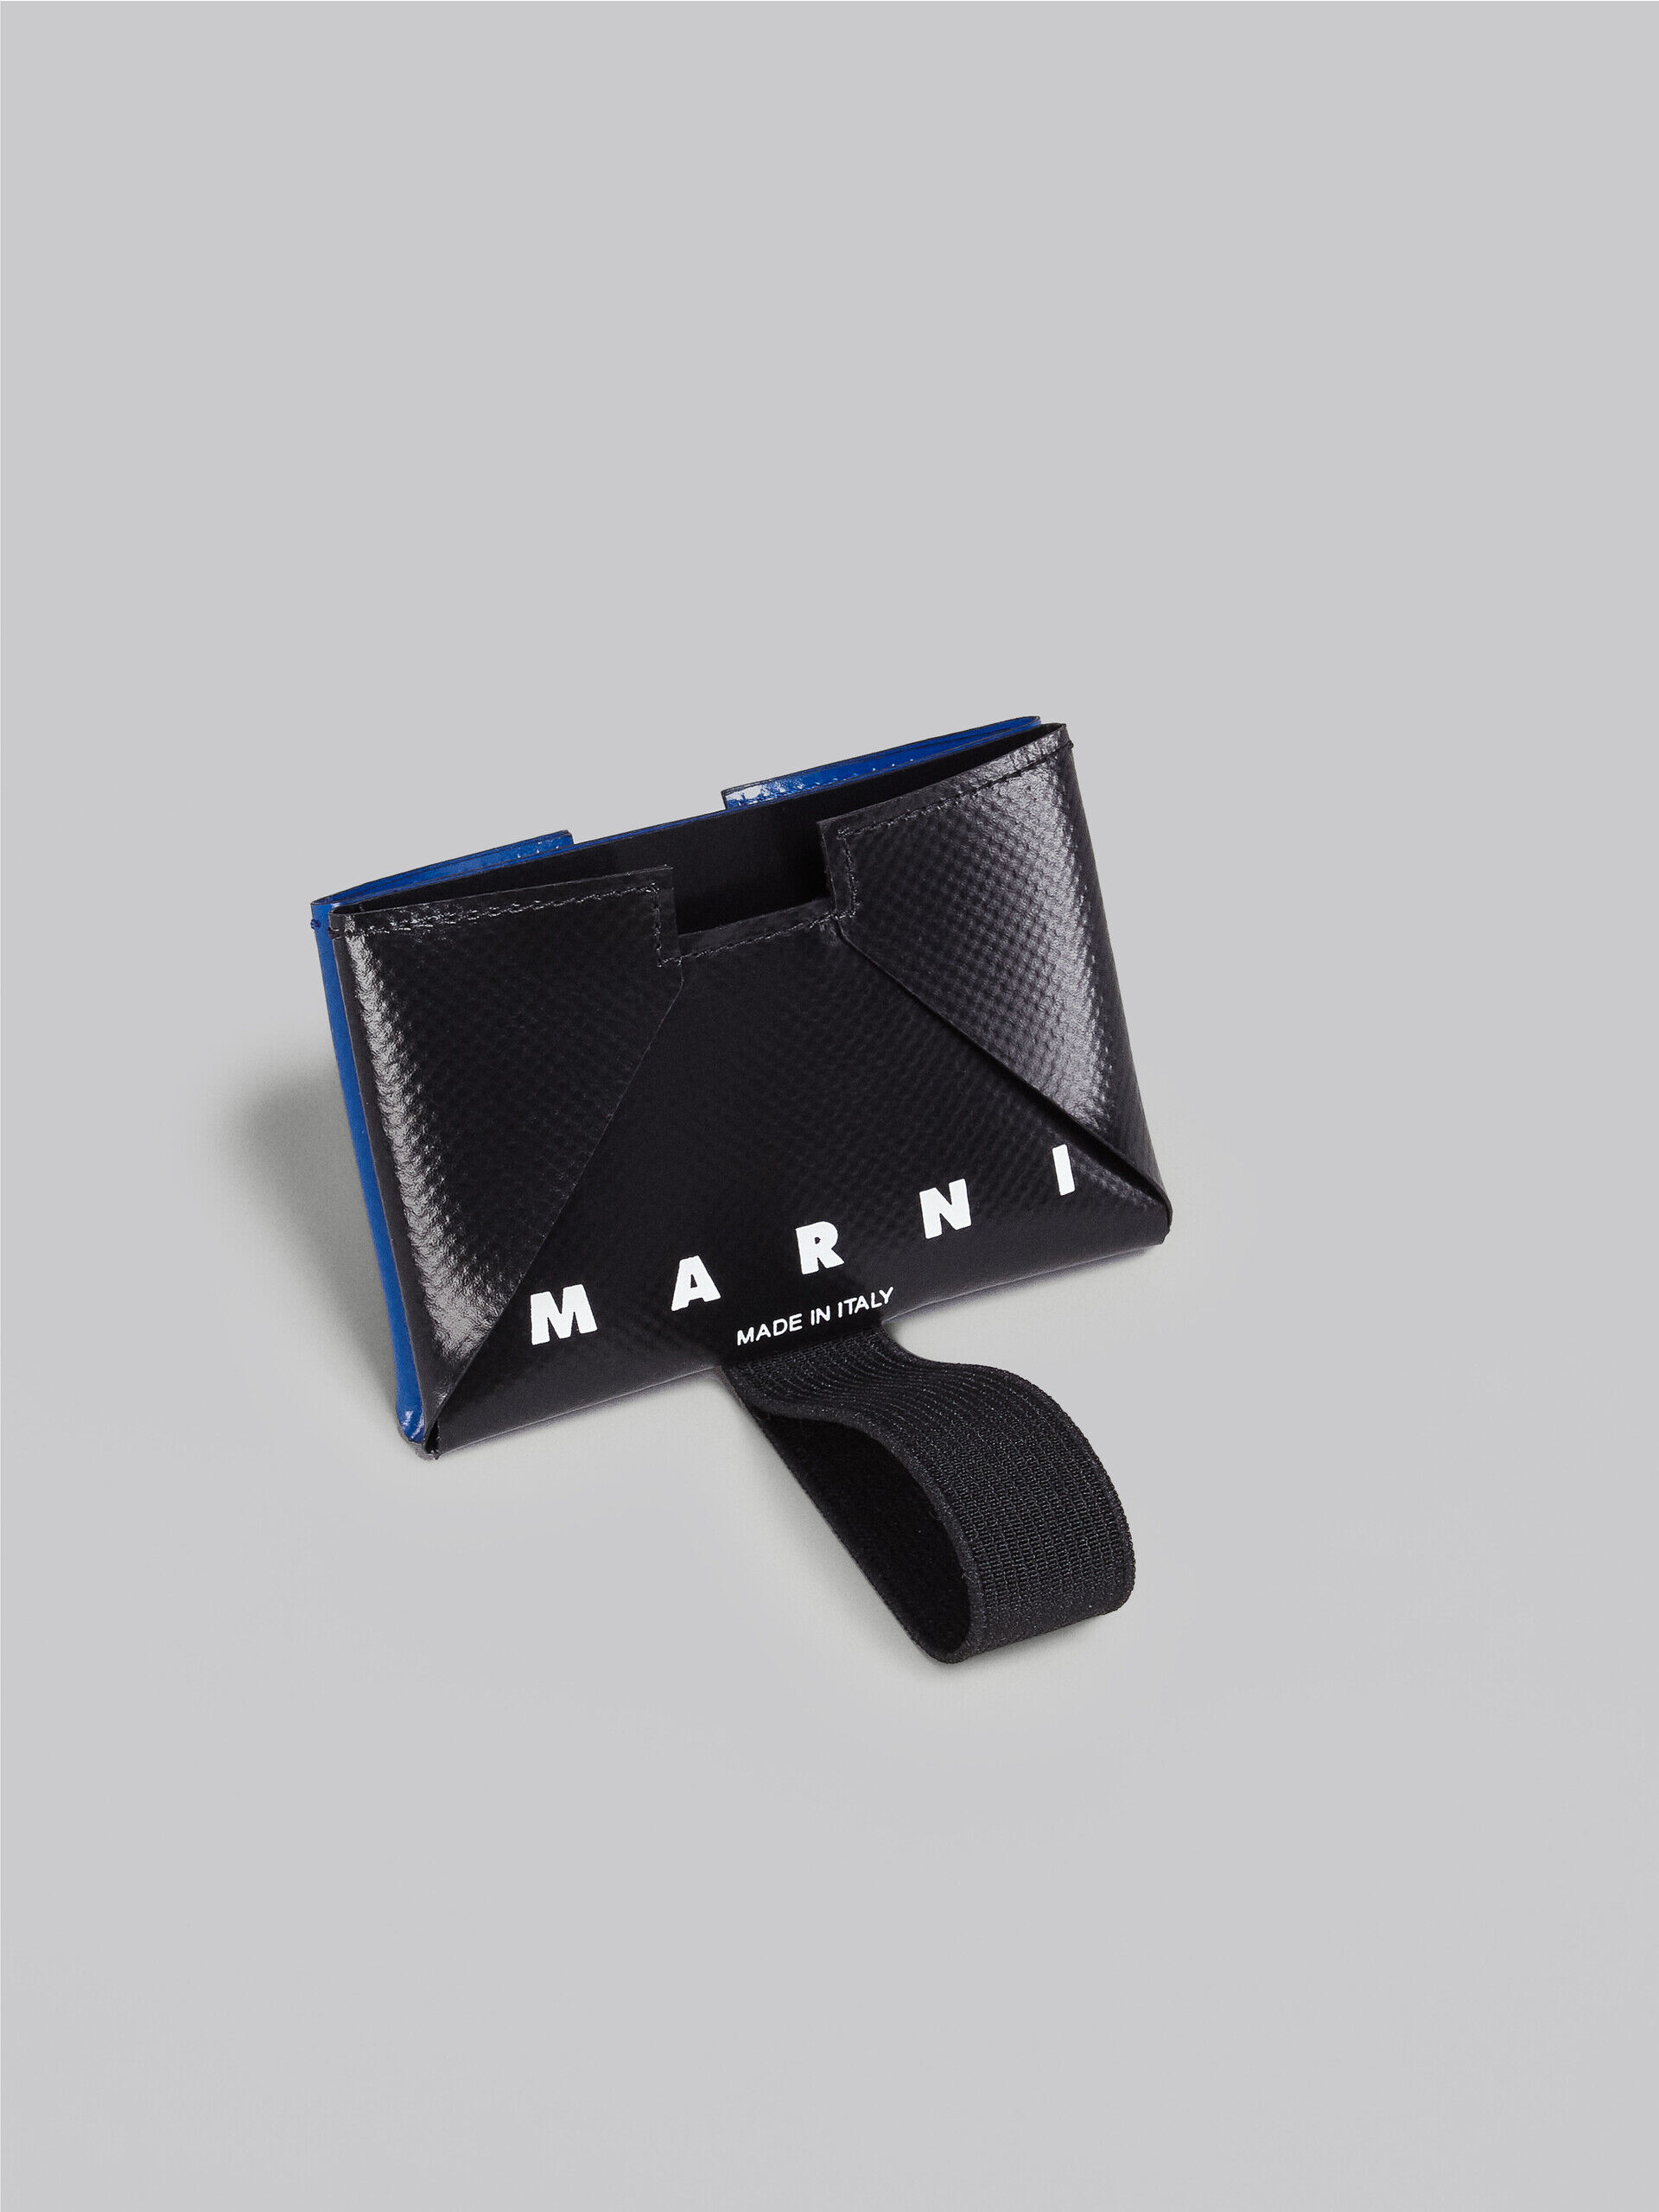 Black and blue card case | Marni